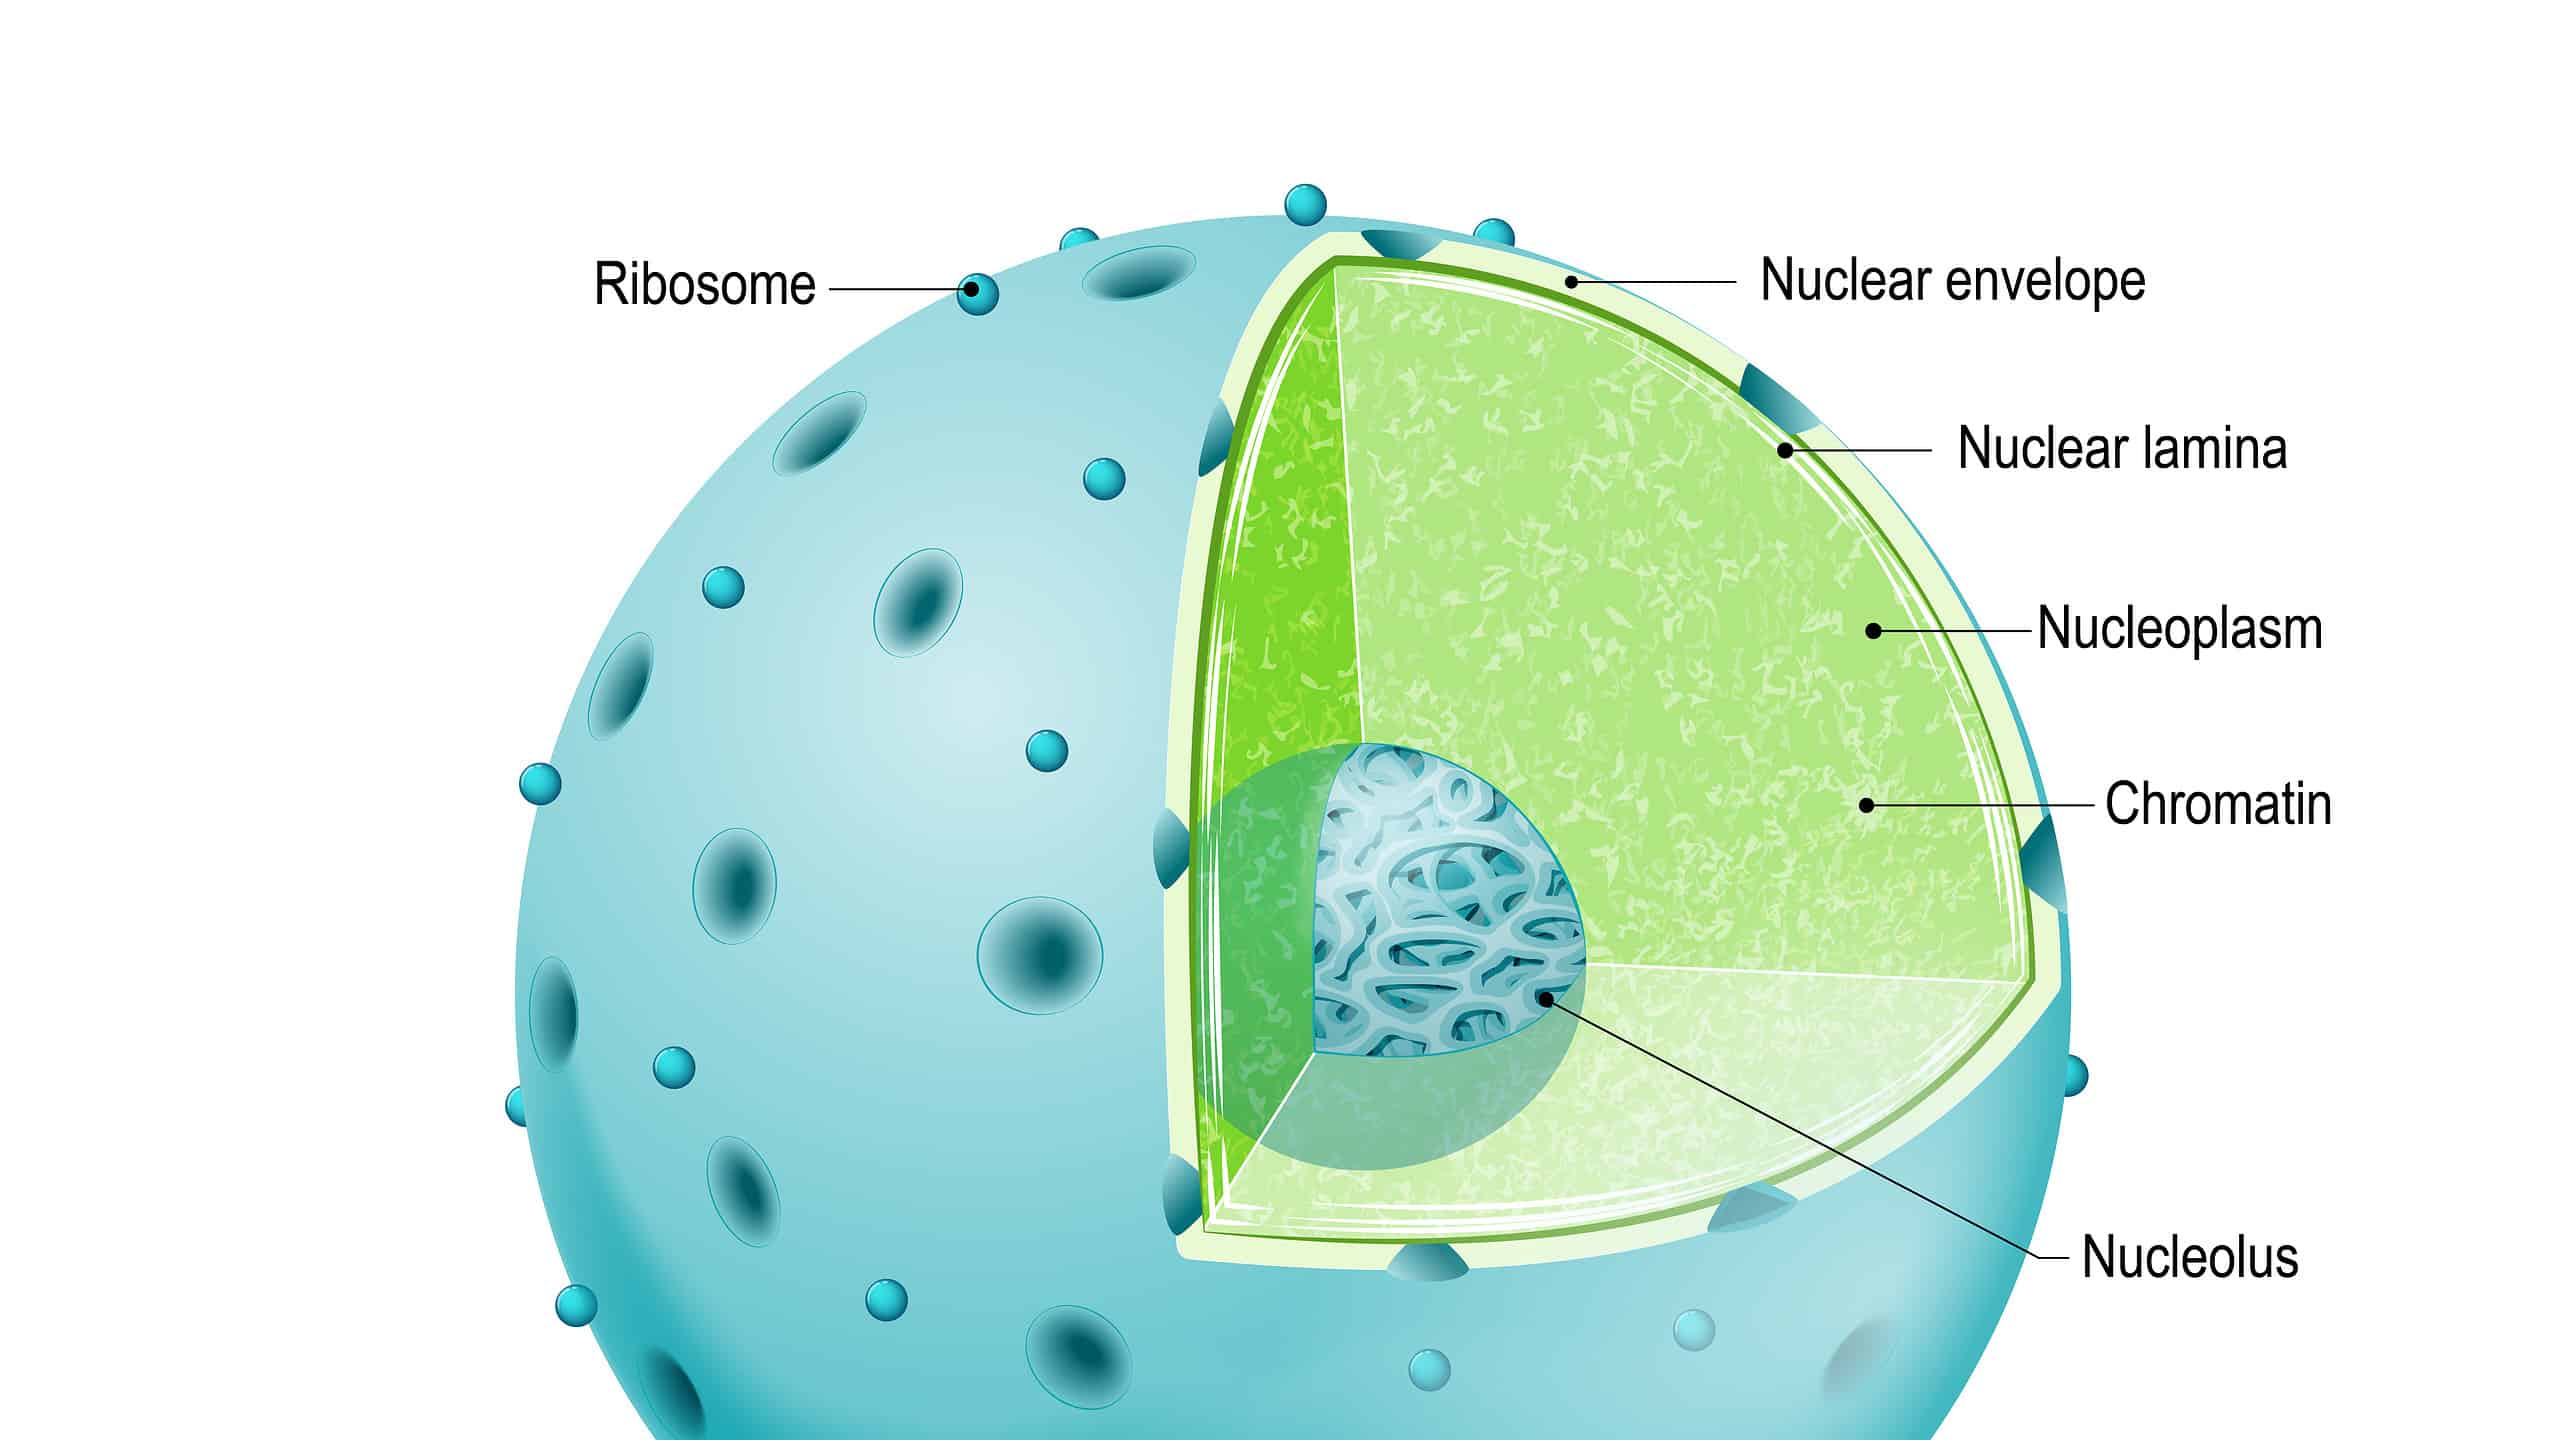 Illustration Explaining the Cell Nucleus